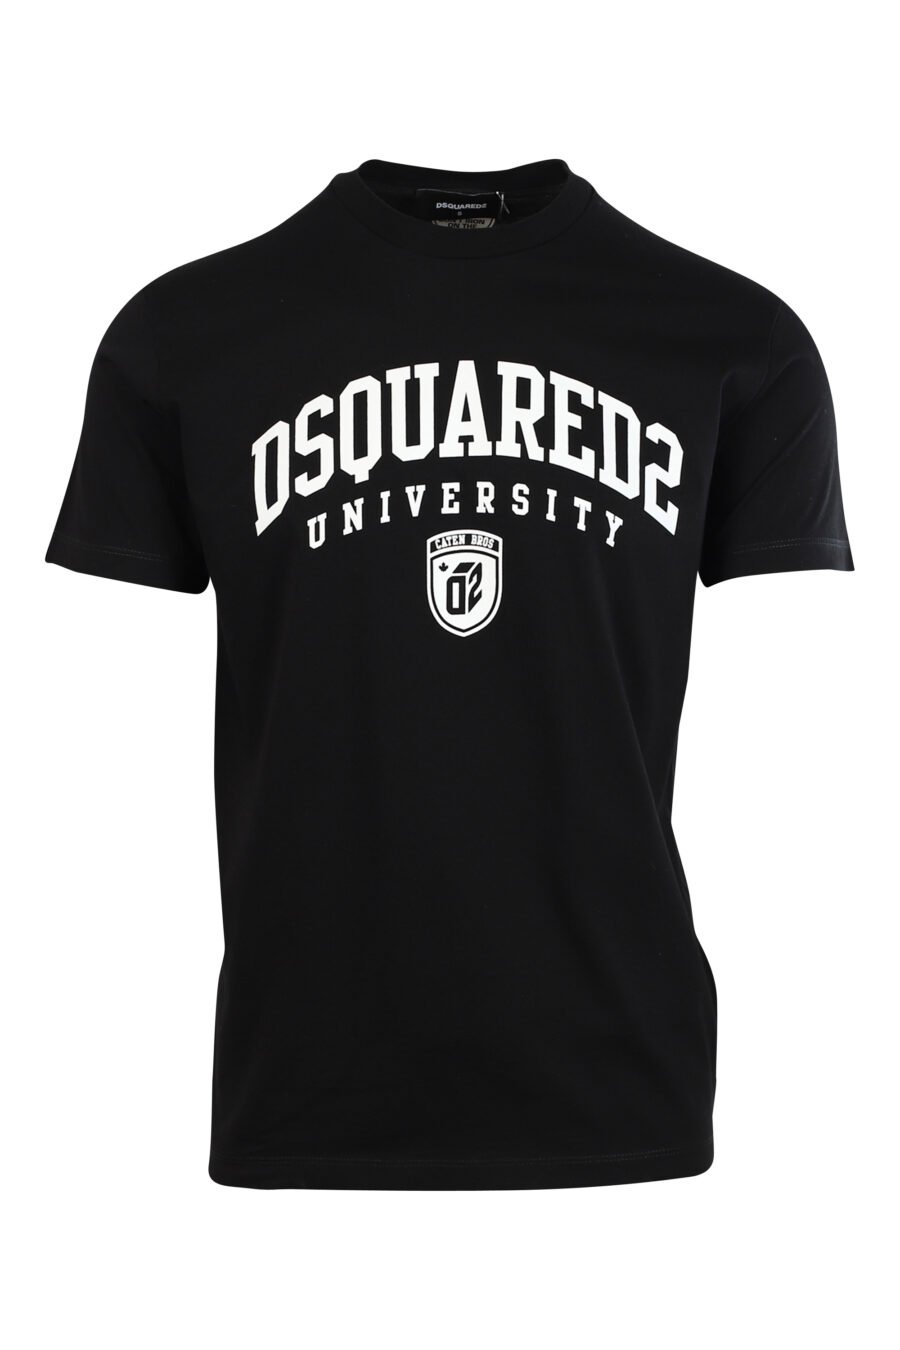 Camiseta negra con maxilogo "university" blanco - 8052134945810